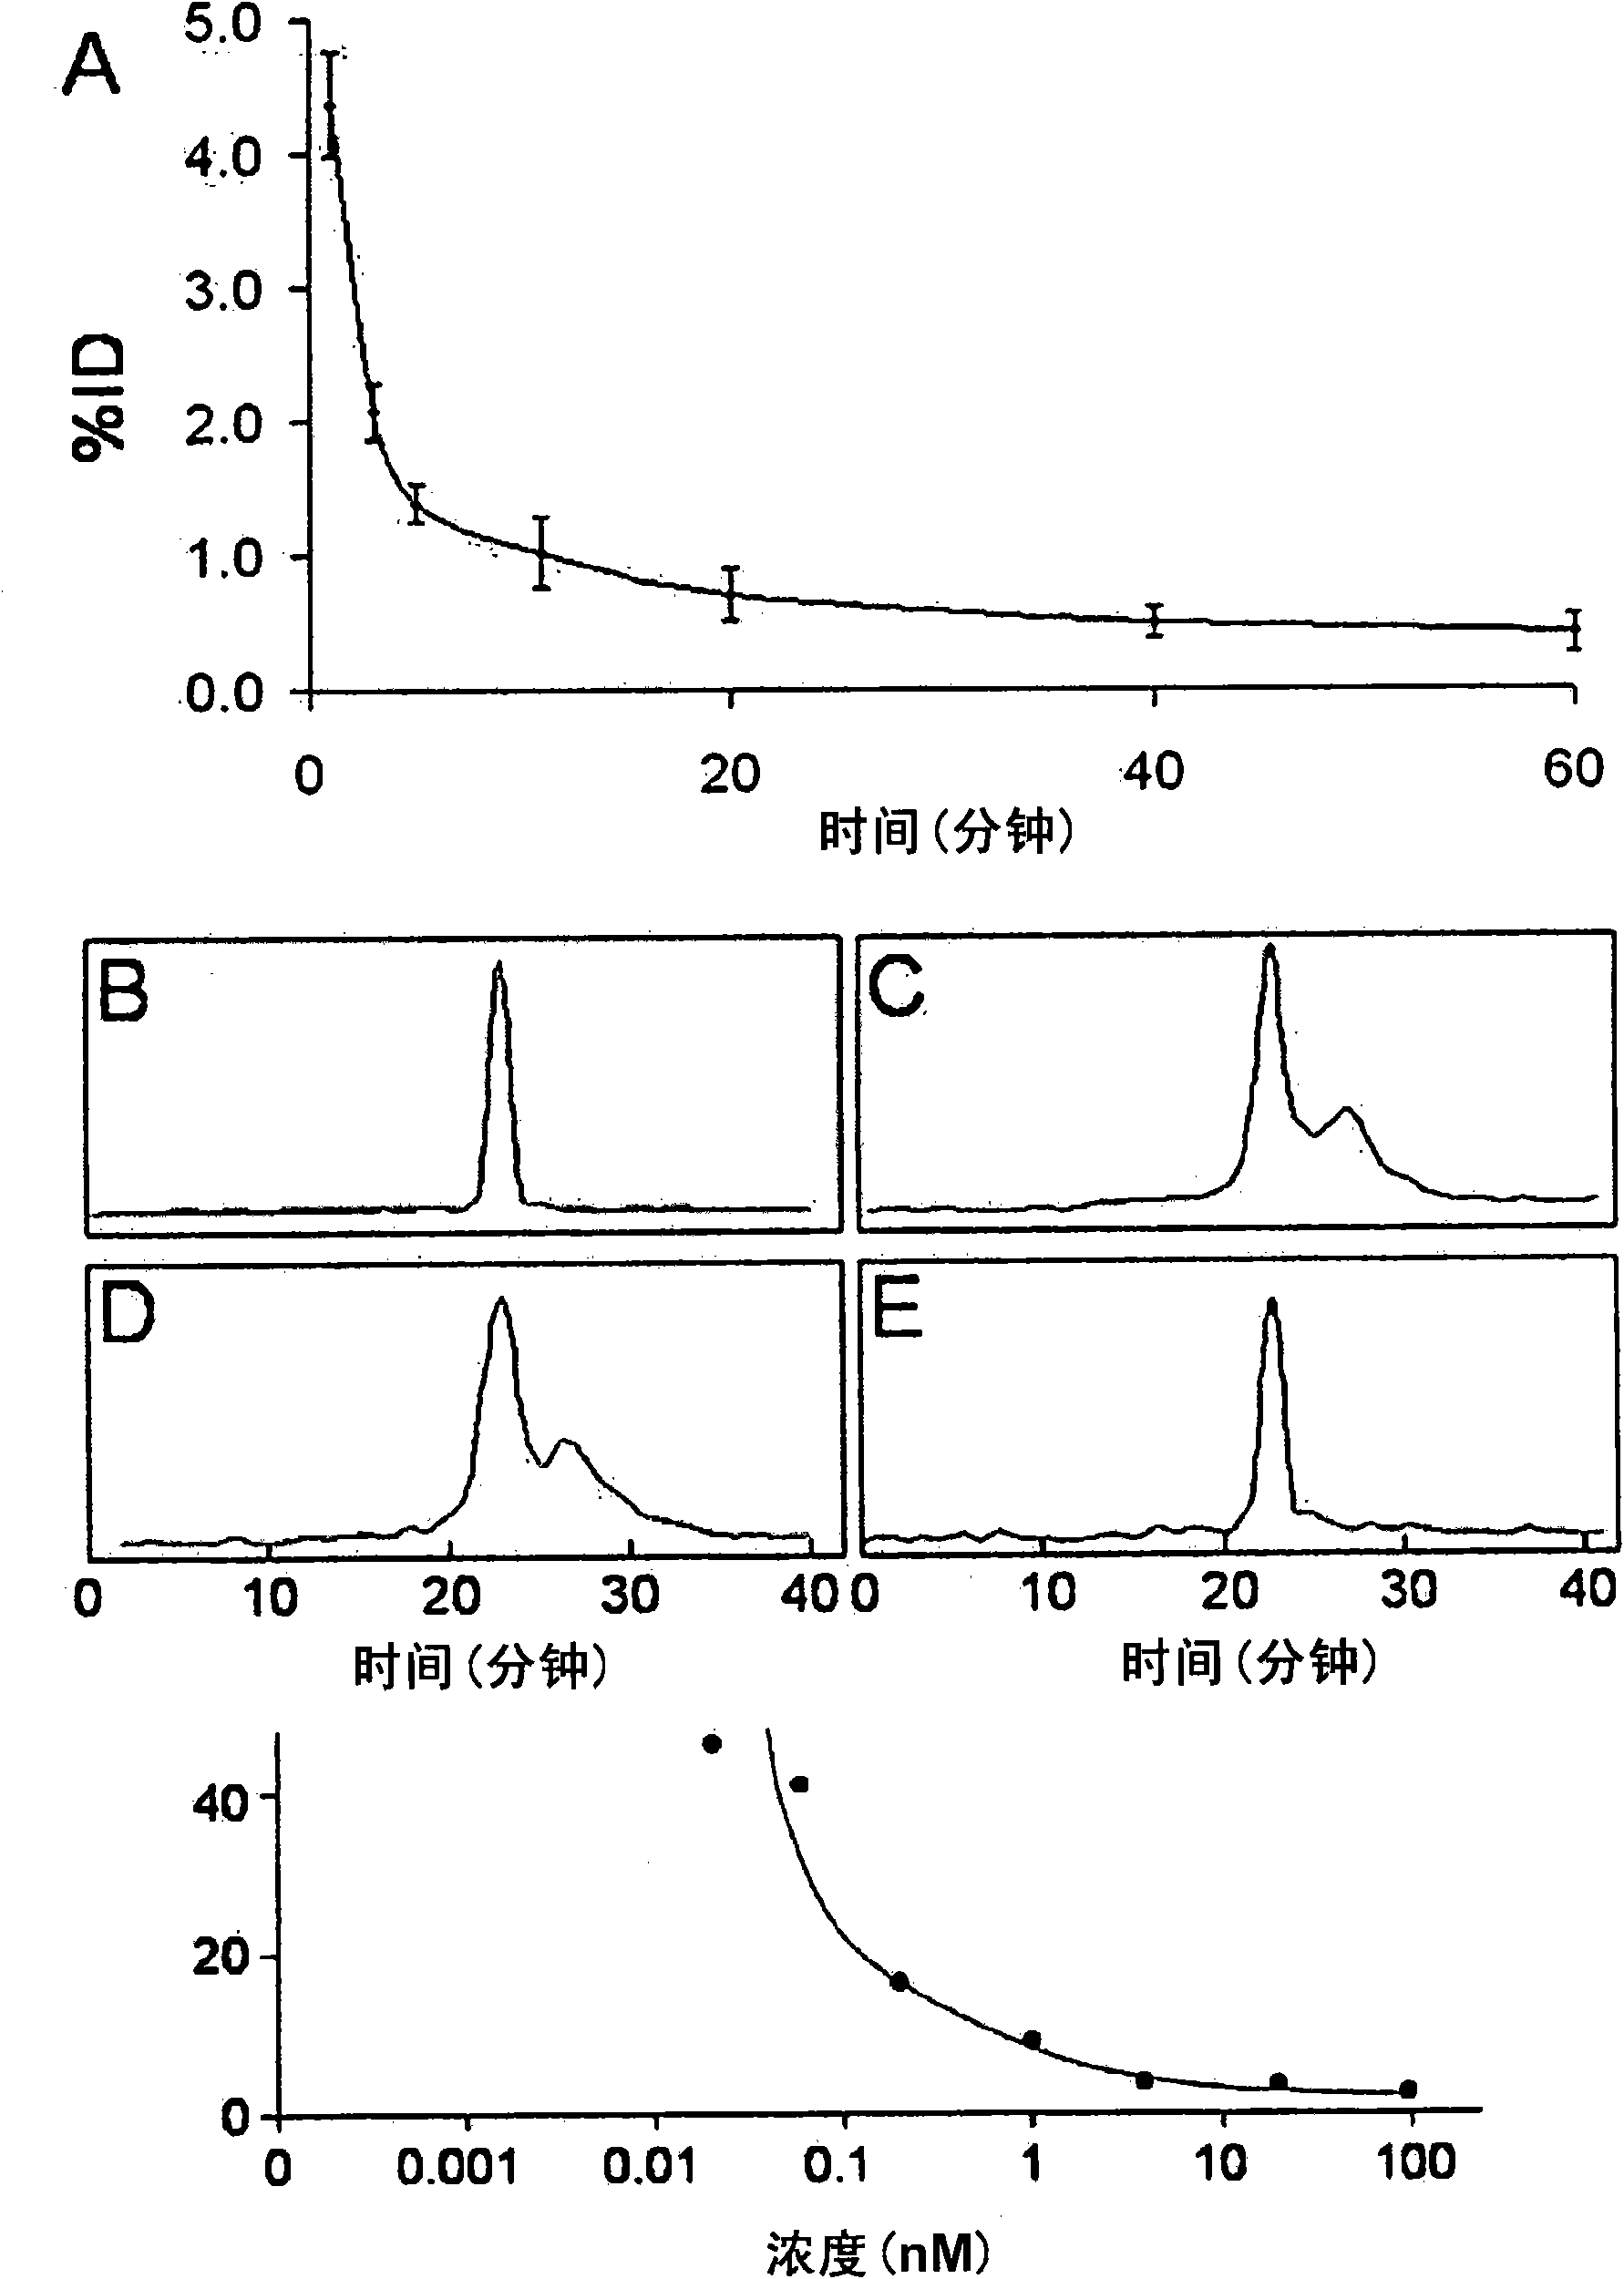 99mTc-labeled 19 amino acid containing peptide for use as phosphatidylethanolamine binding molecular probe and radiopharmaceutical